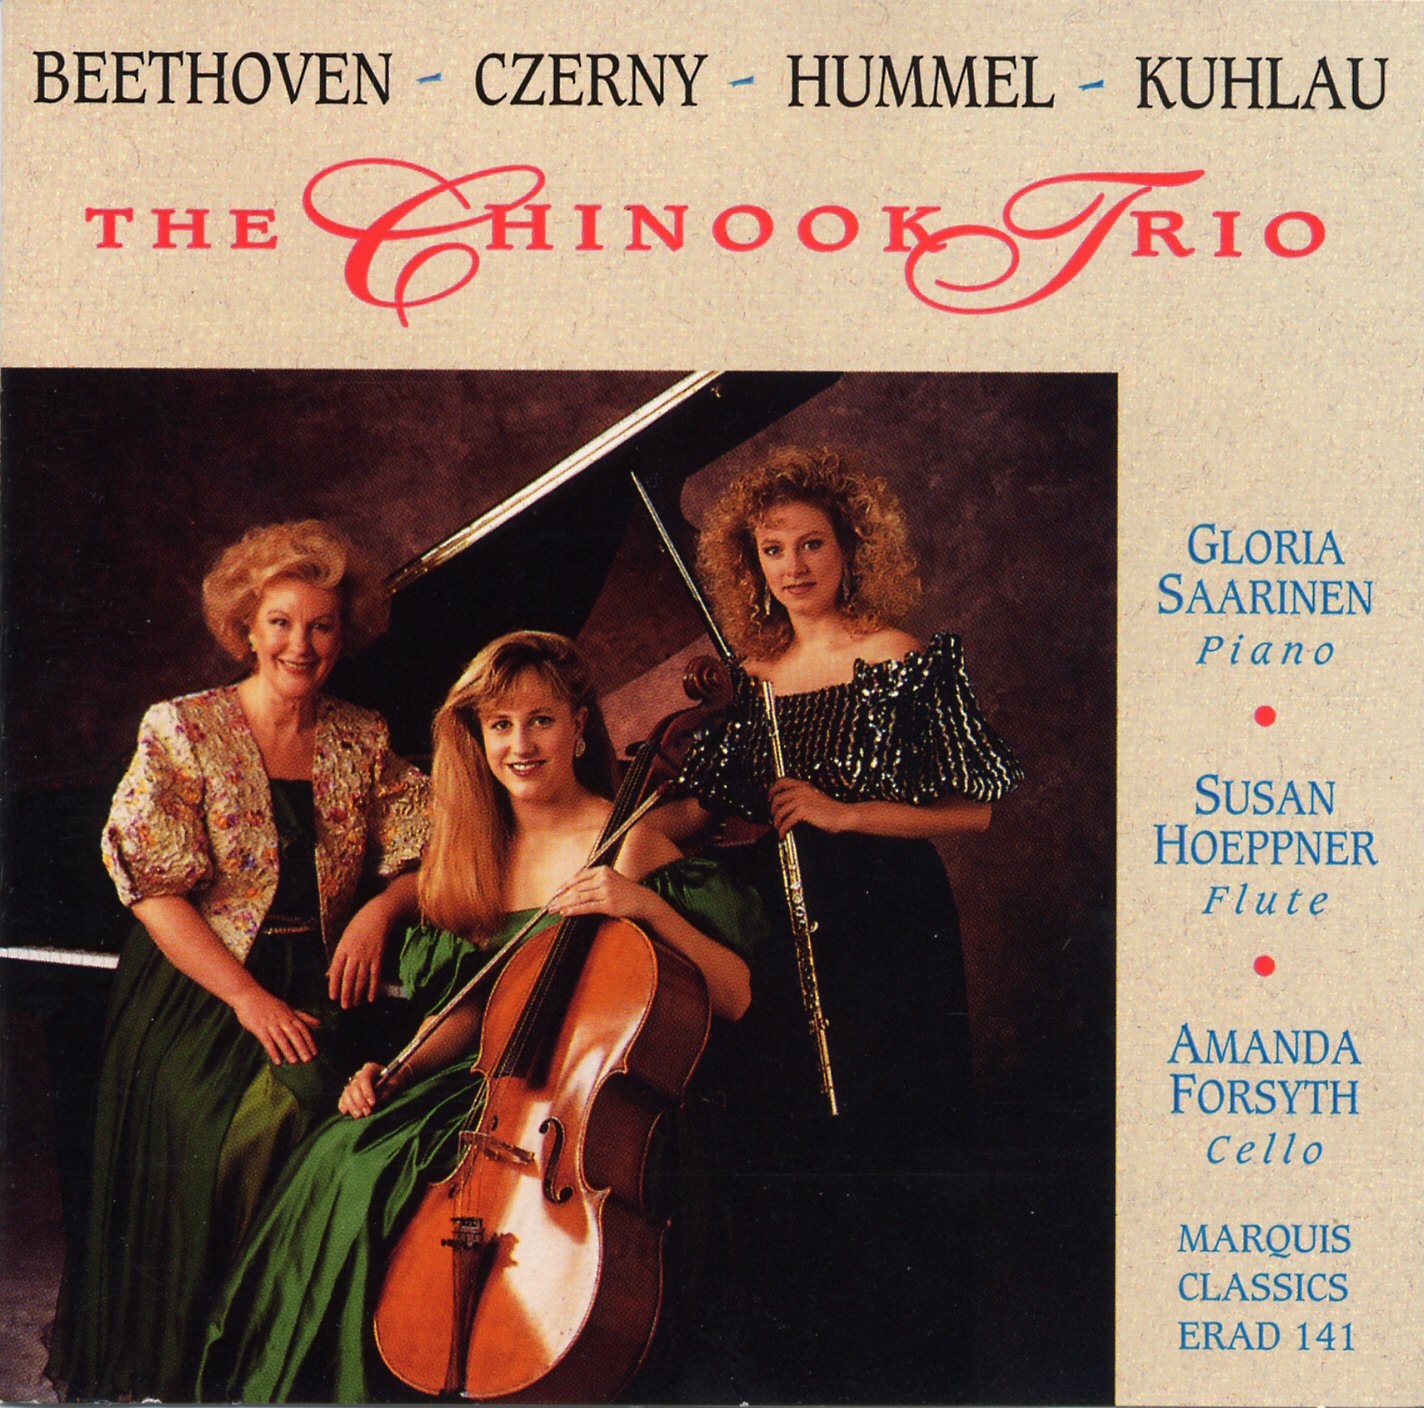 Бетховен трио. Трио Адажио. Трио Хуммель. Аллегро Модерато в Музыке. Hummel Trio 7 виолончель.